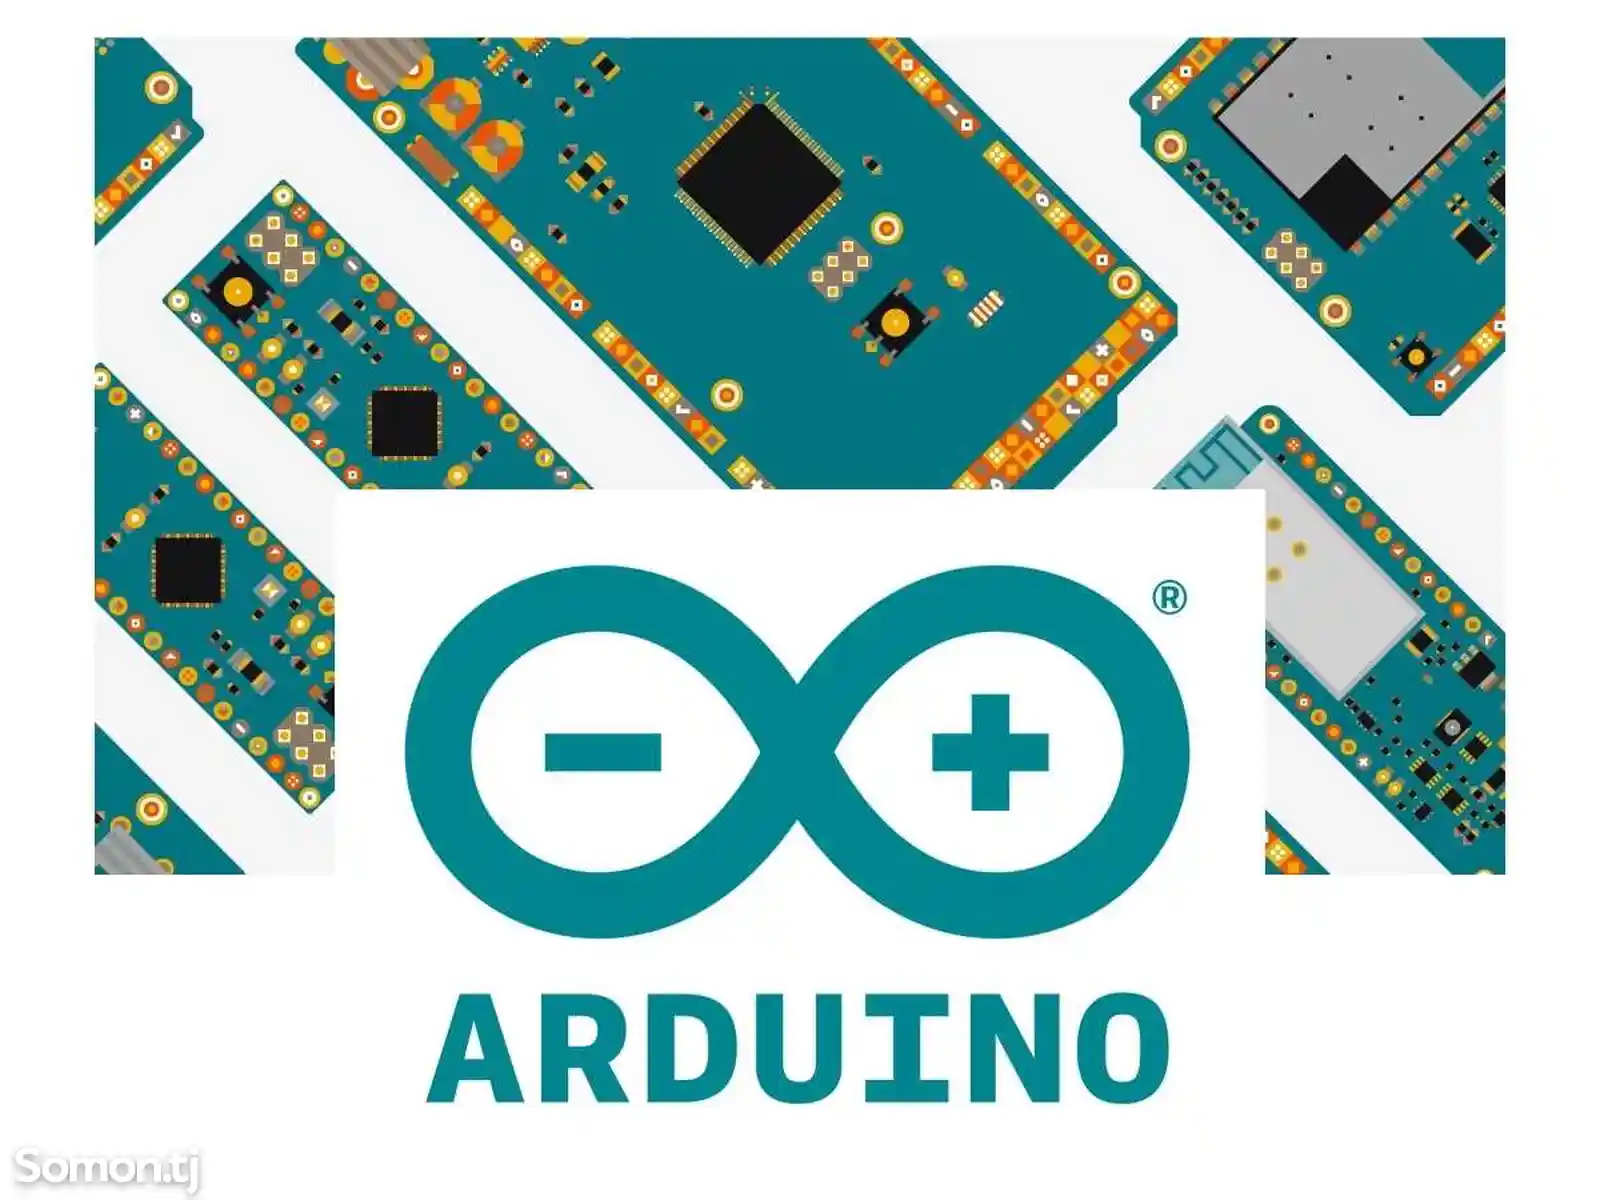 Схемы и скетчи под Ардуино-Arduino